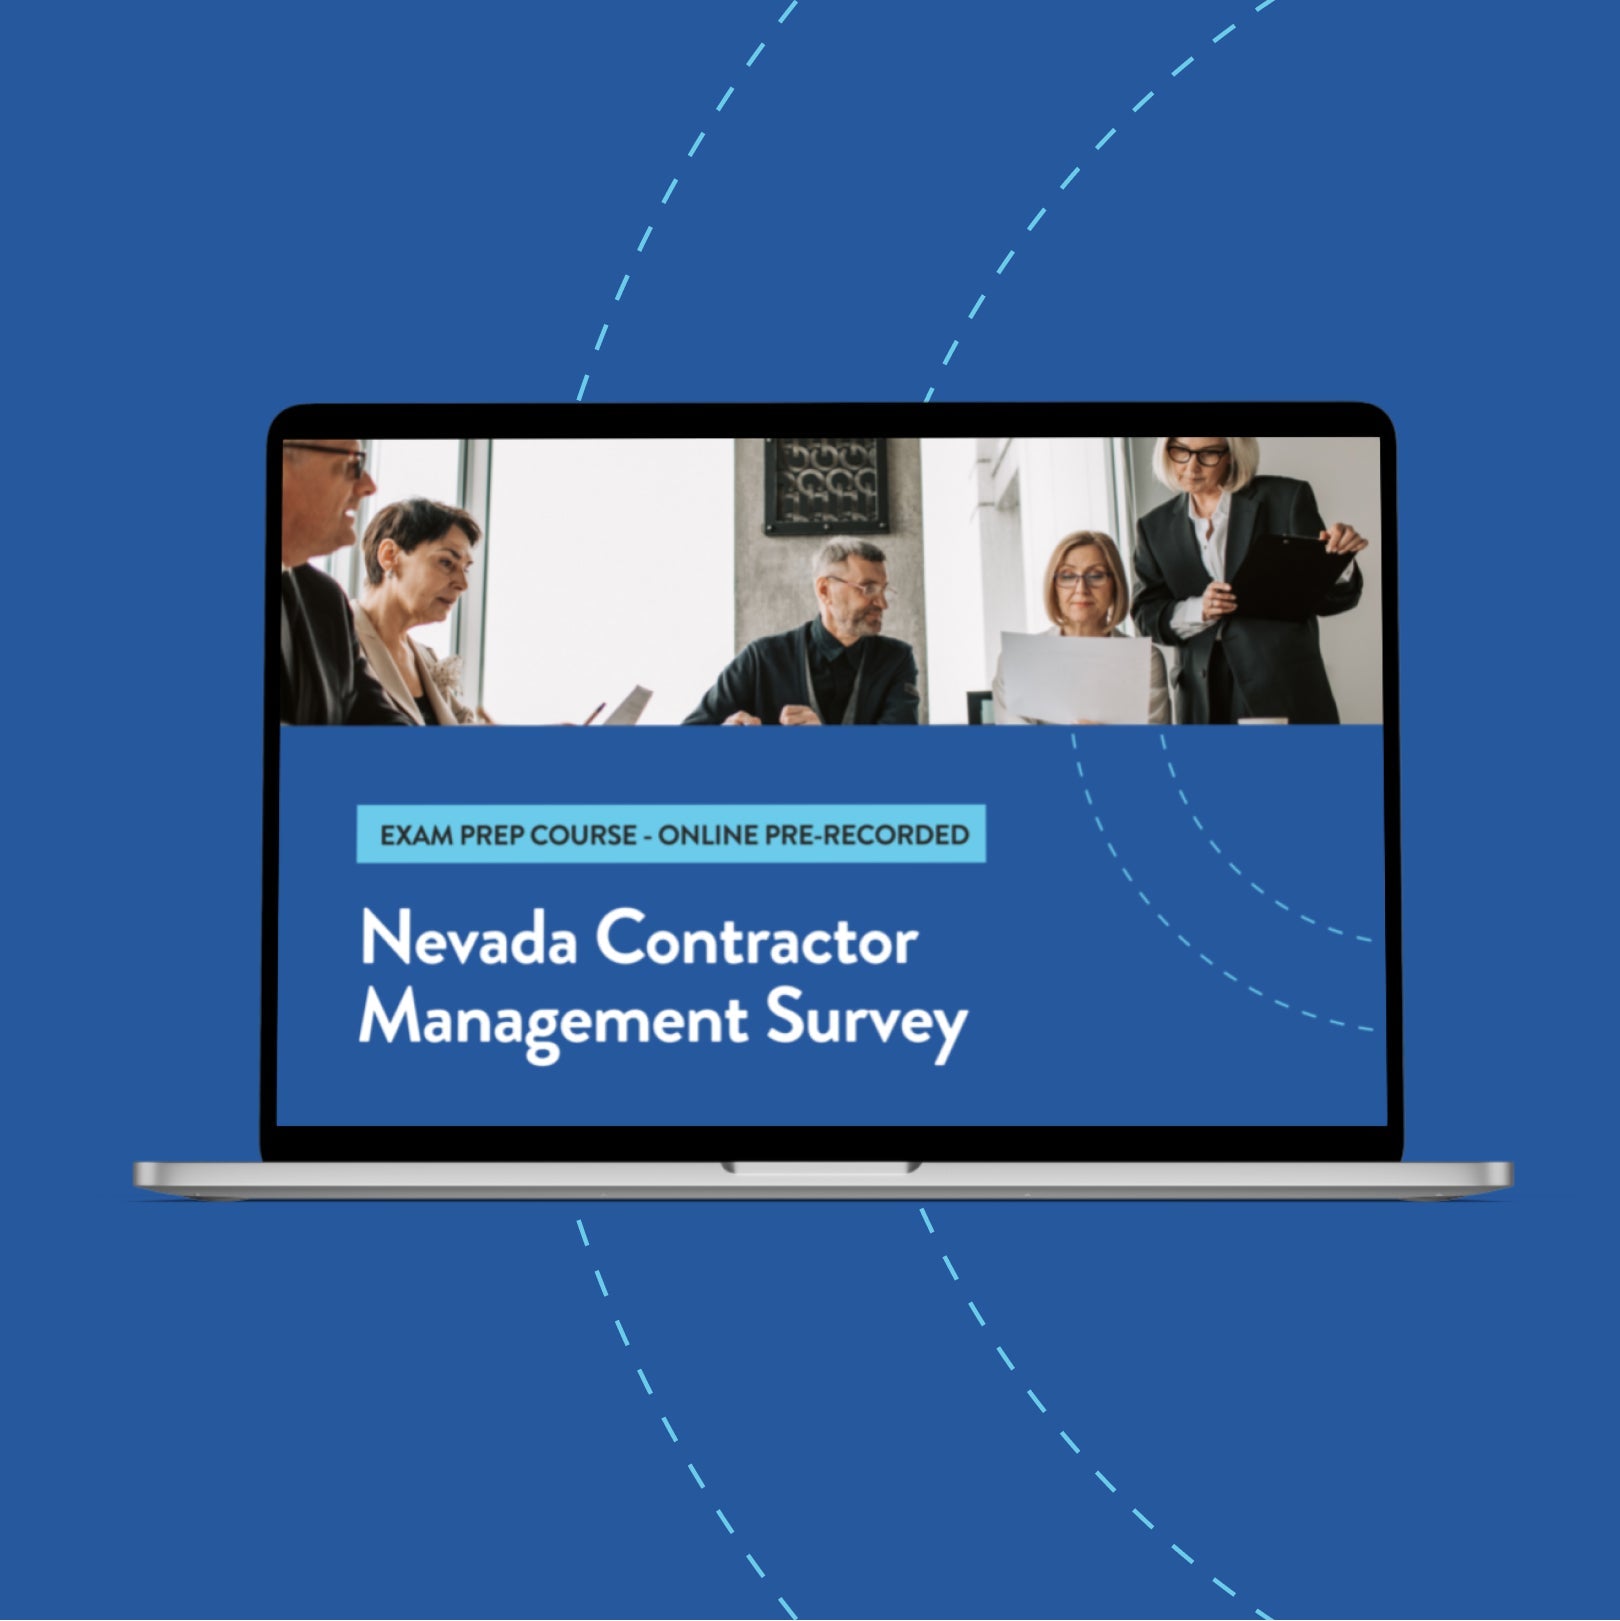 Nevada Contractor Management Survey Exam Prep Course - Online Pre-Recorded